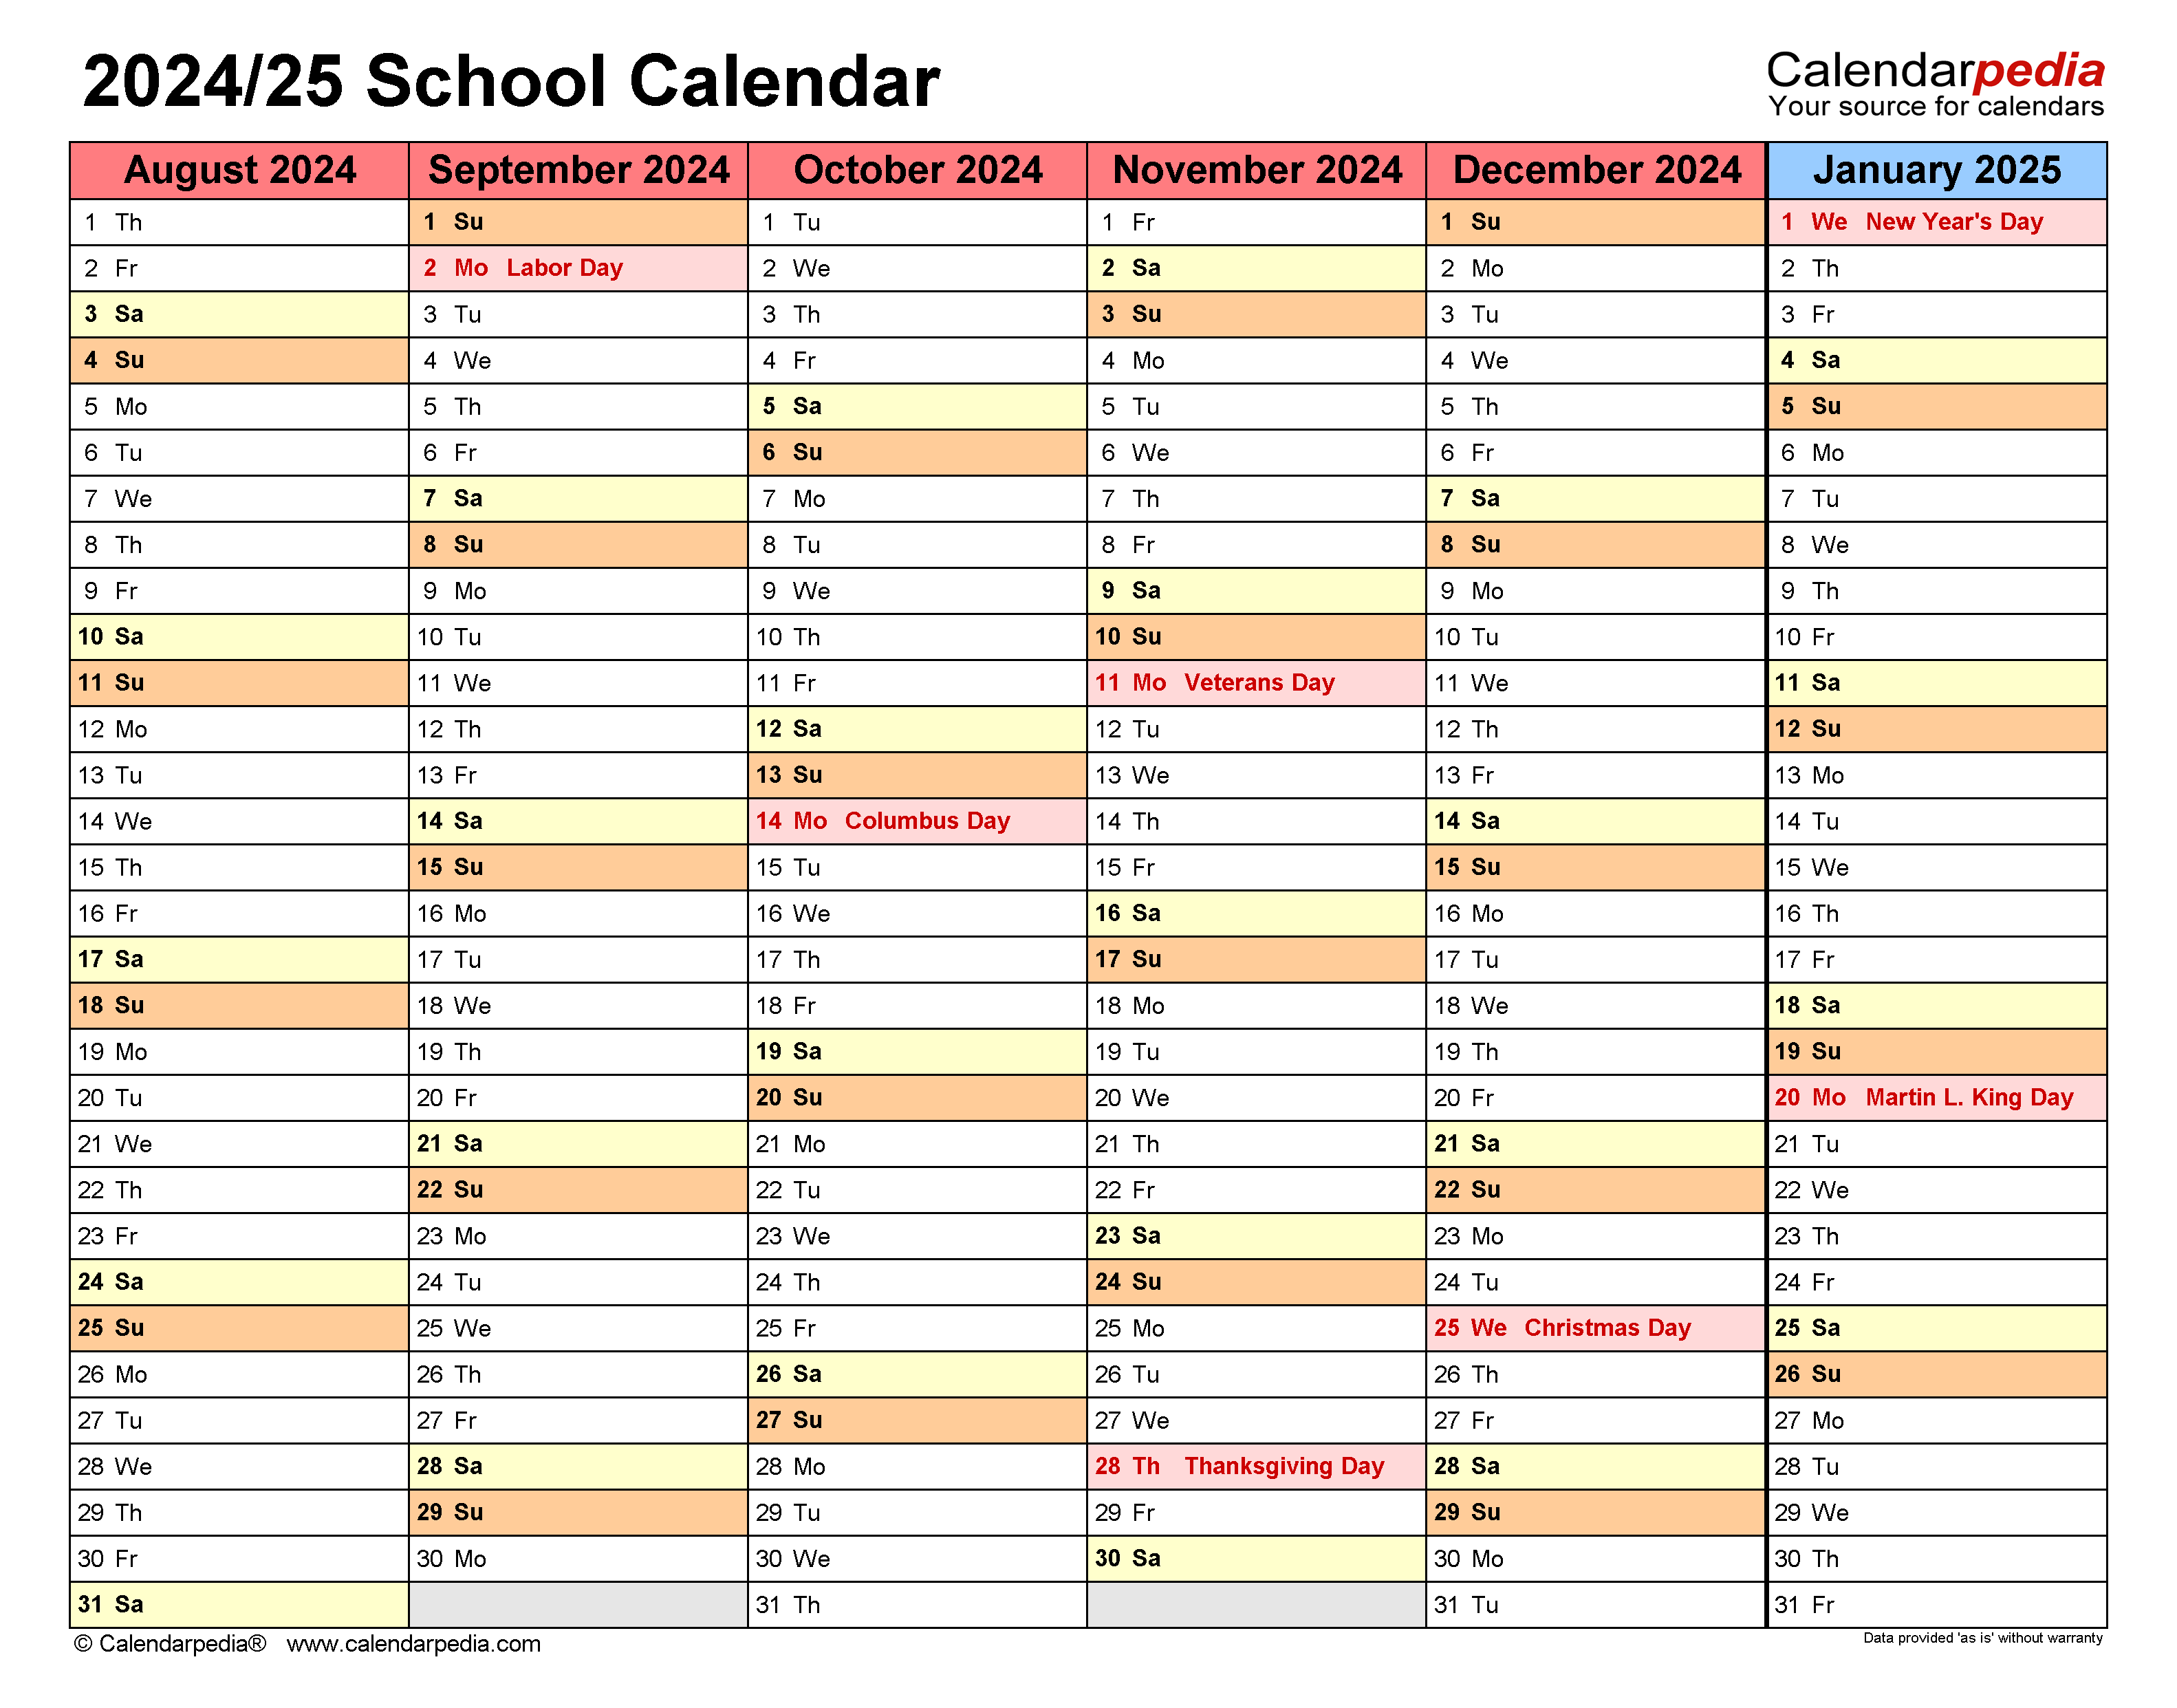 Free 2024 2025 Year School Calendar Blank Brita Colette | Free Printable 2 Year Calendar 2024 To 2025